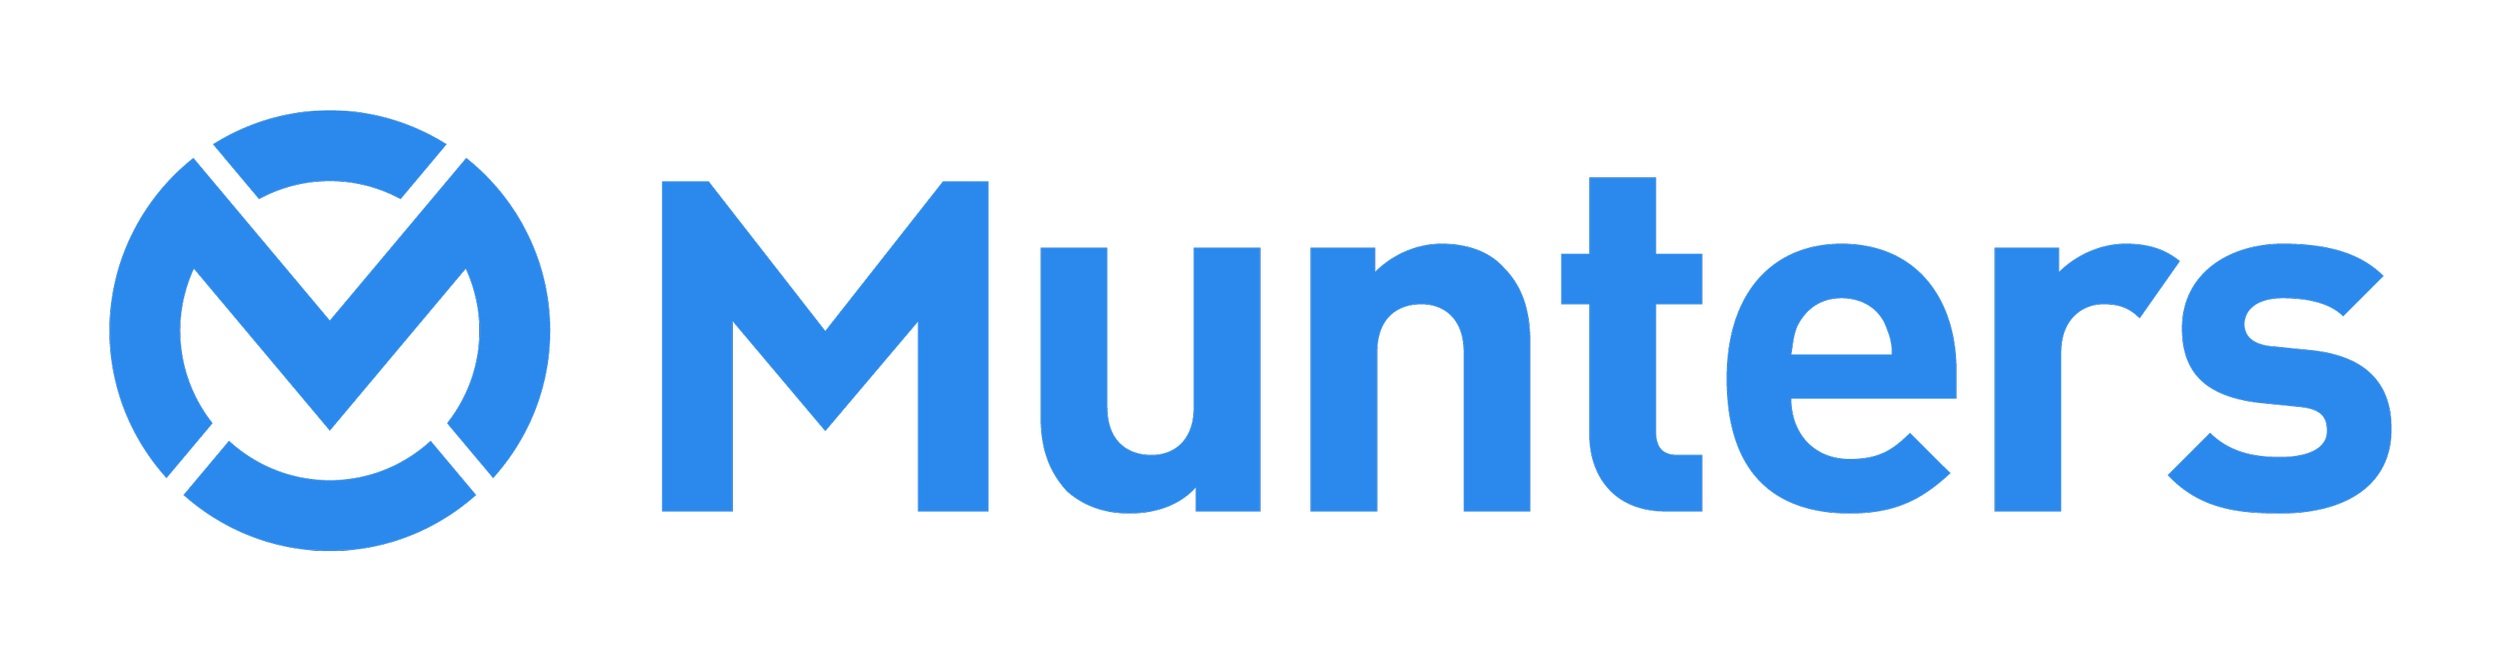 munters_logo_rgb.jpg